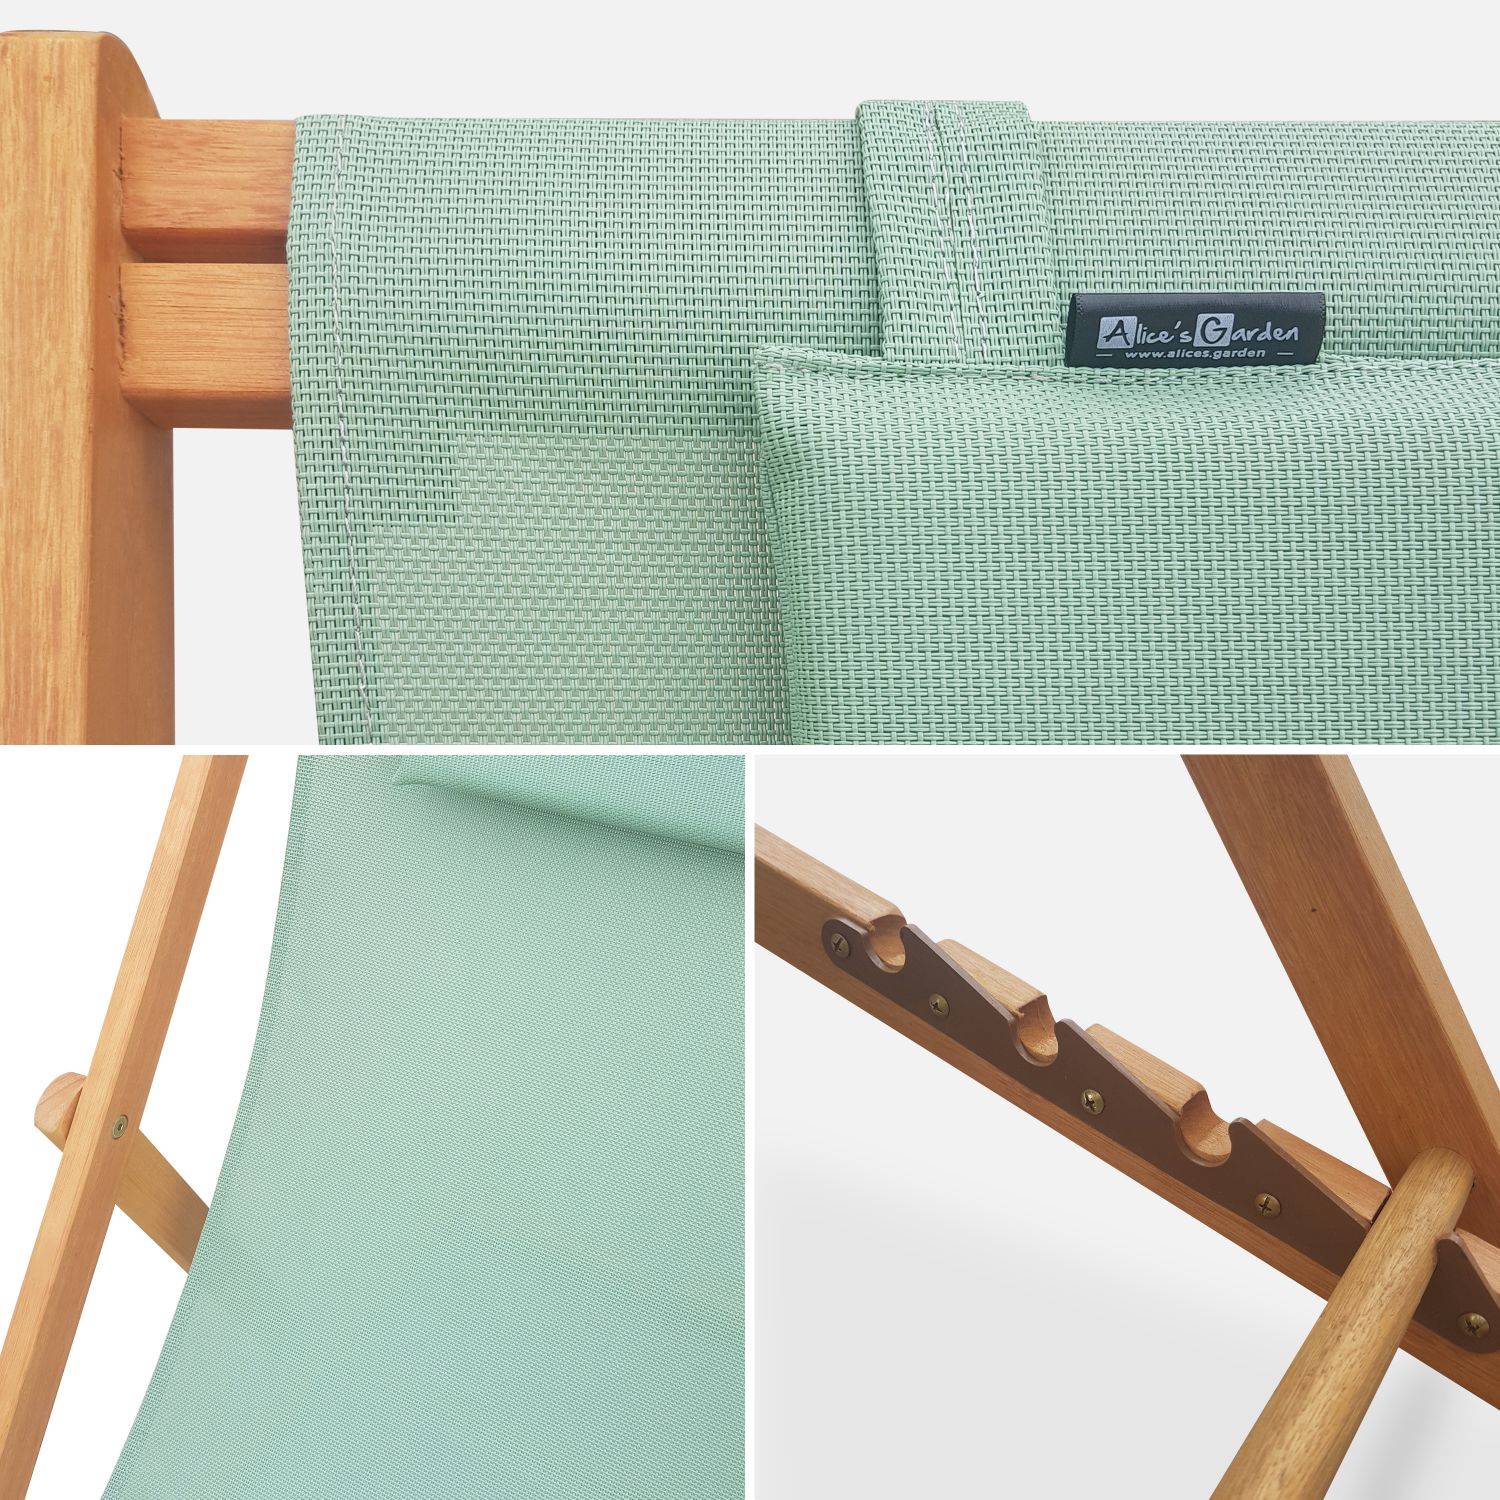 Holzliegestühle - Creus - 2 Liegestühle aus geöltem FSC-Eukalyptus mit graugrünem Kopfstützenkissen Photo4